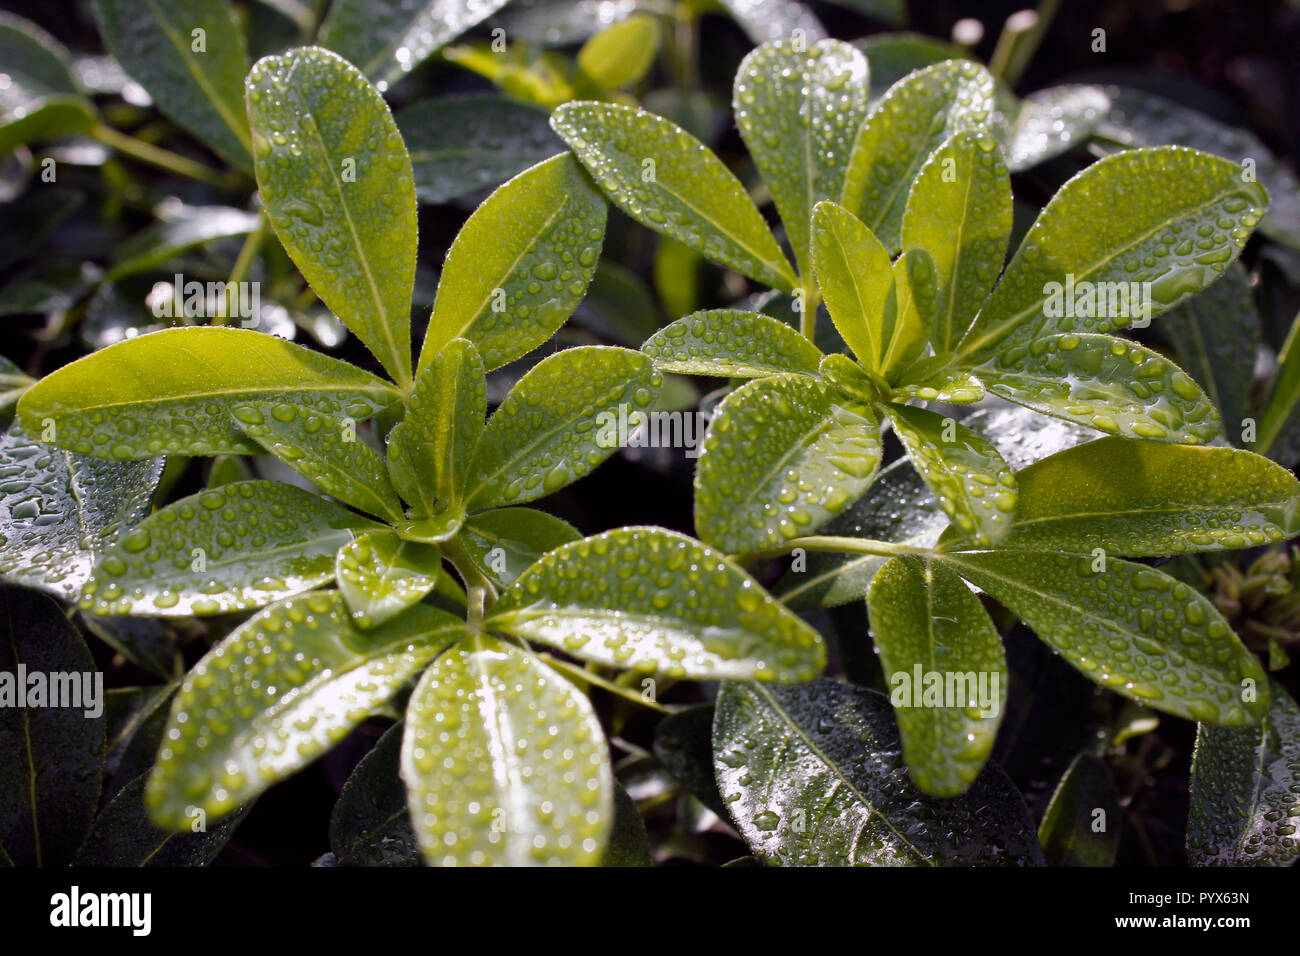 Raindrops cling to fresh green shoots of the Choisya ternata plant Stock Photo